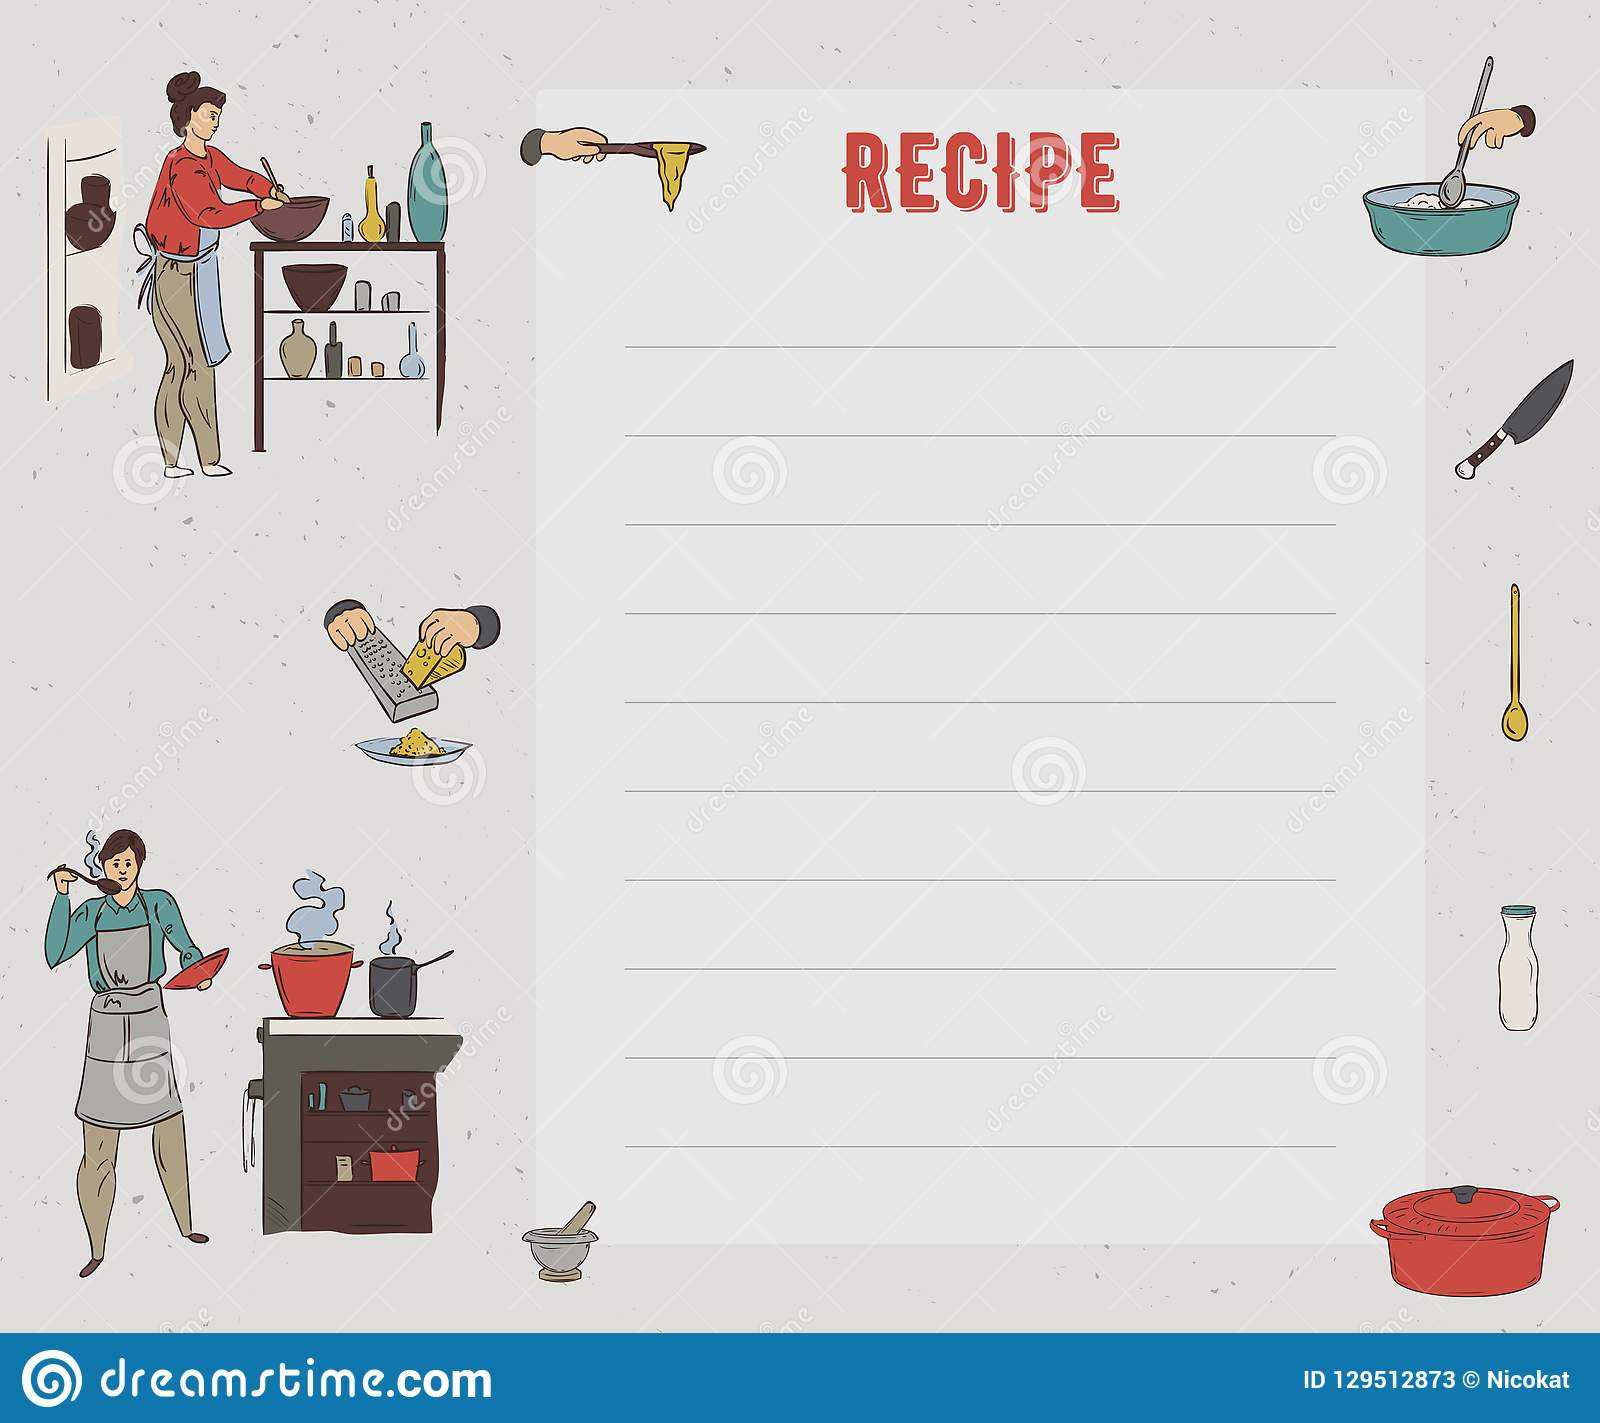 Recipe Card. Cookbook Page. Design Template With People With Restaurant Recipe Card Template